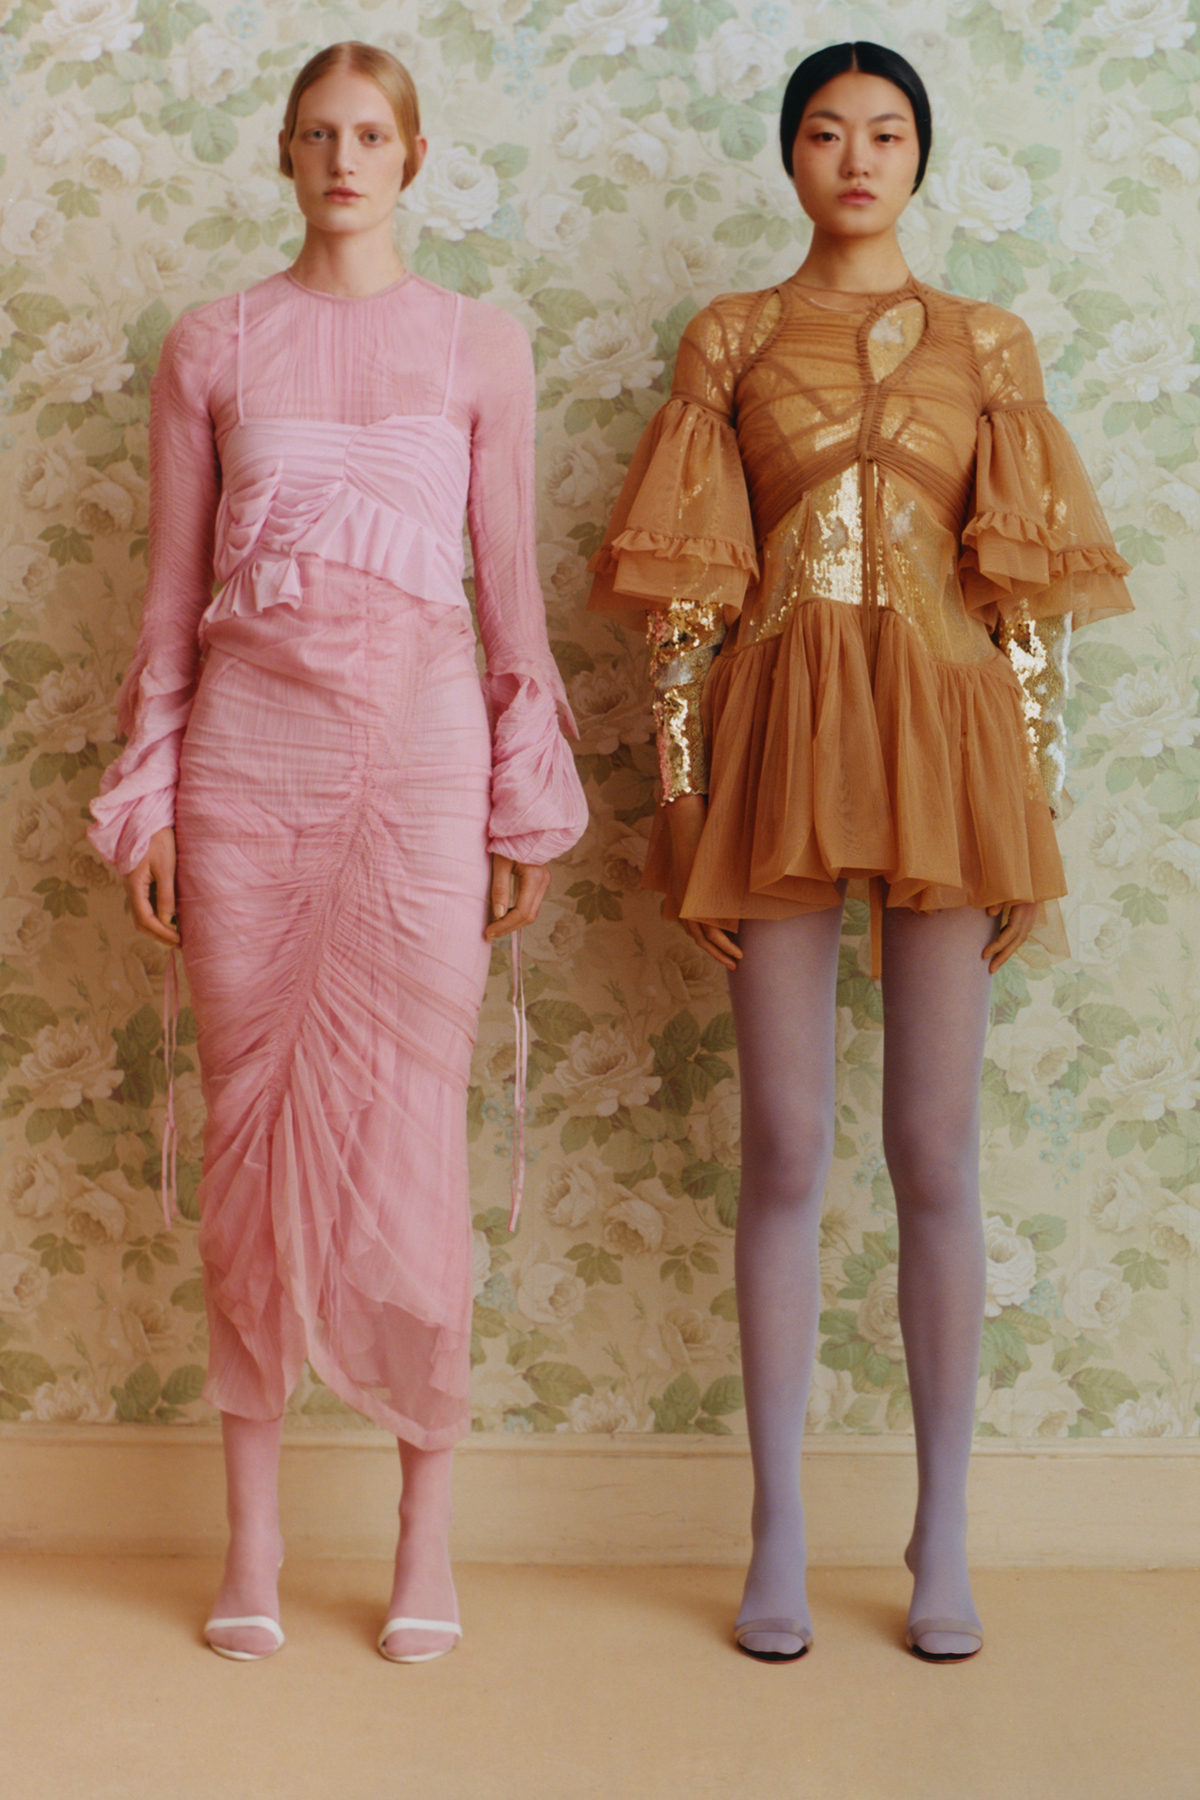 Two models wearing dresses